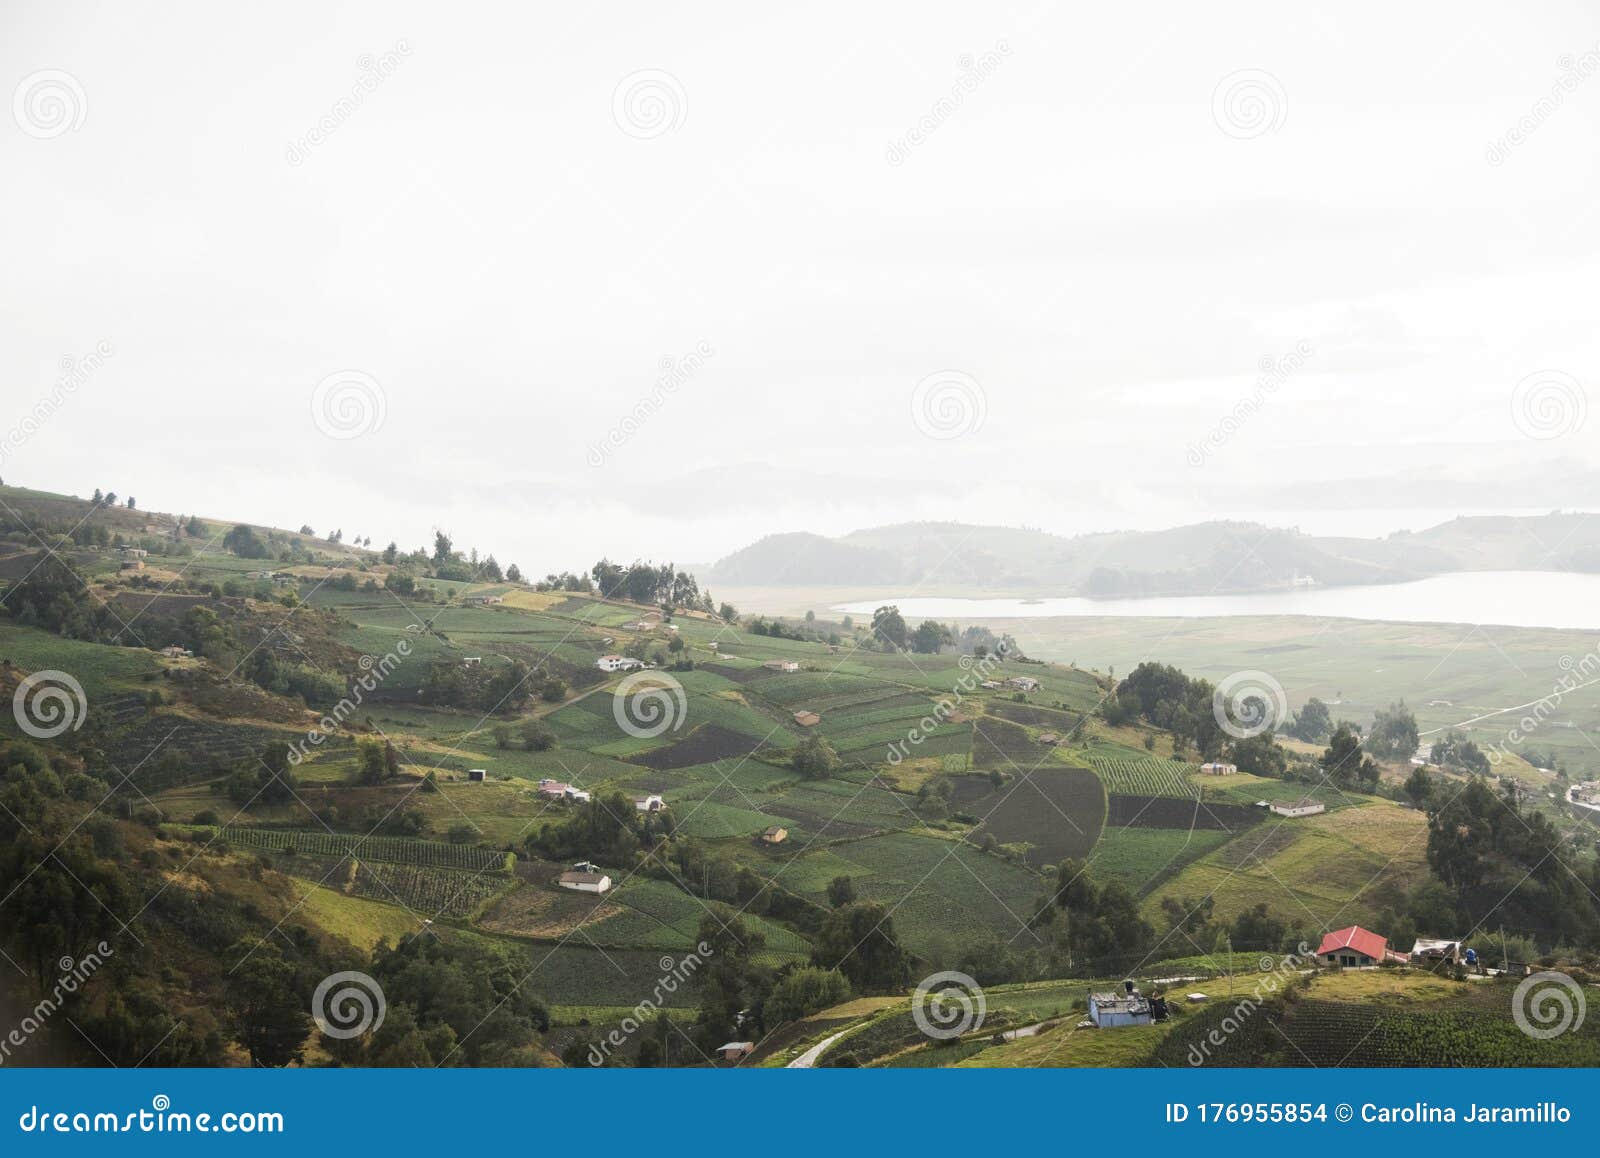 rural mountainous landscape; fields in aquitania, colombia, near lake tota